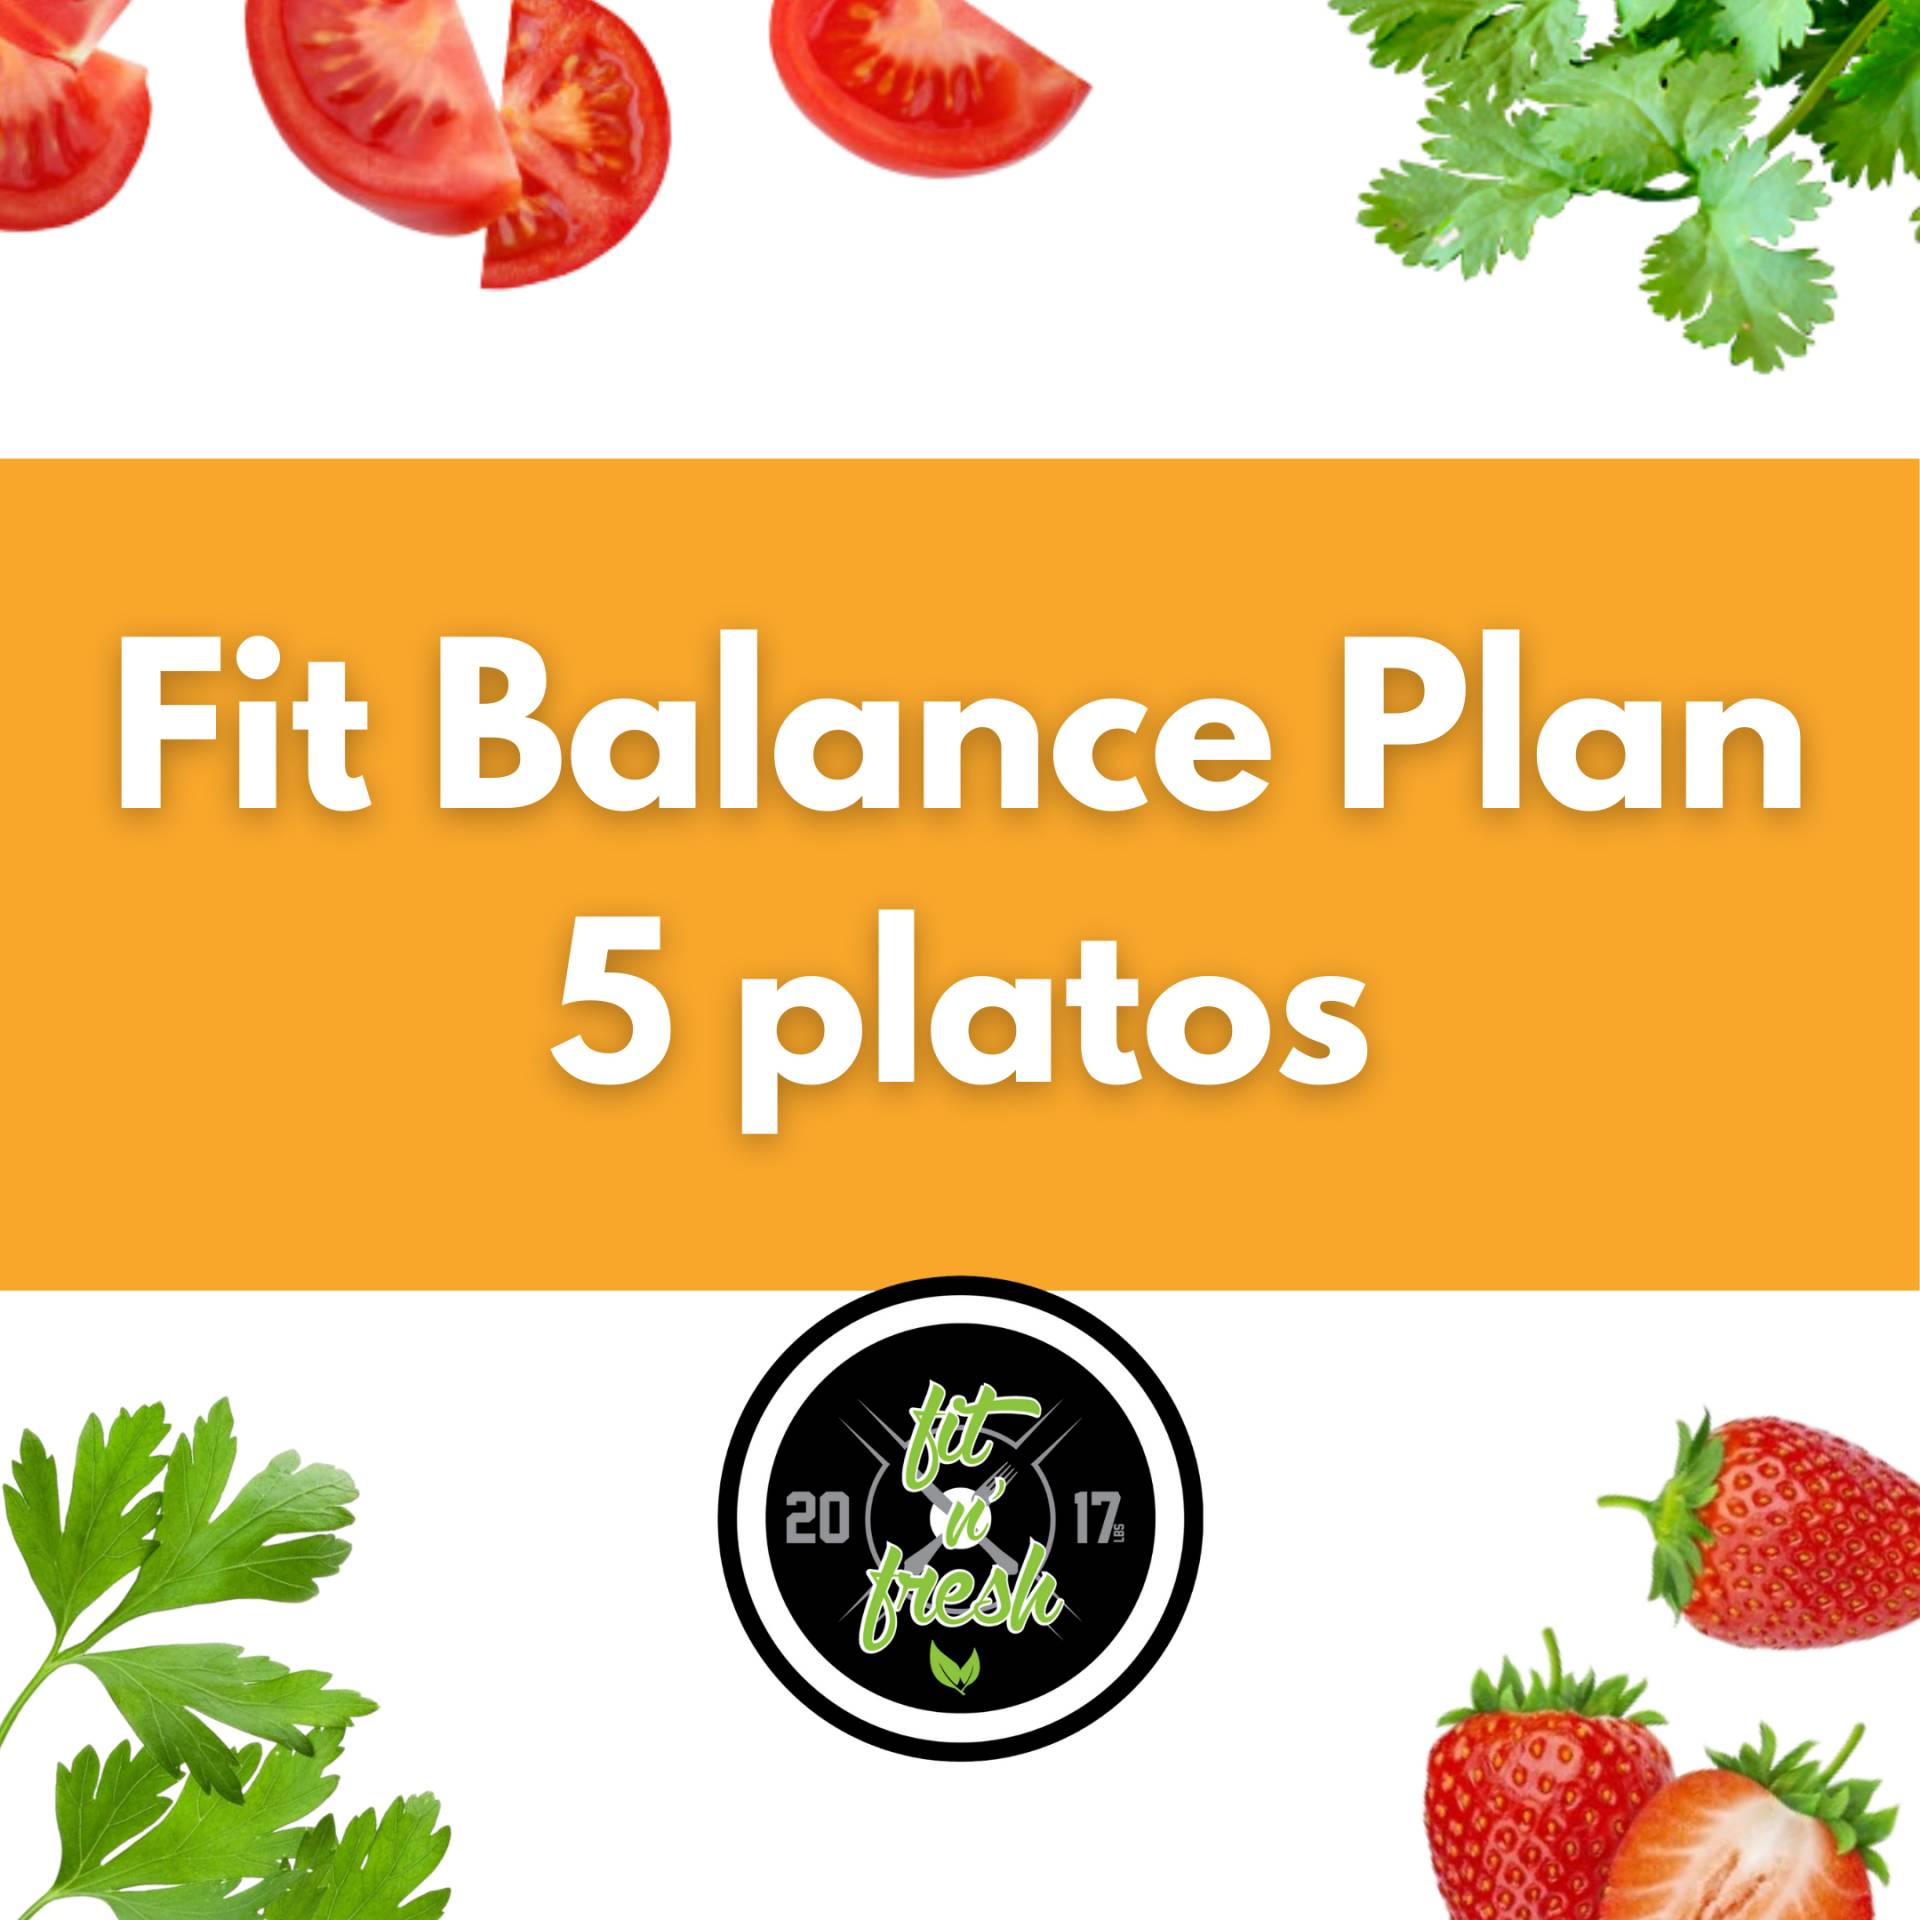 Fit Balance Plan - 5 Platos